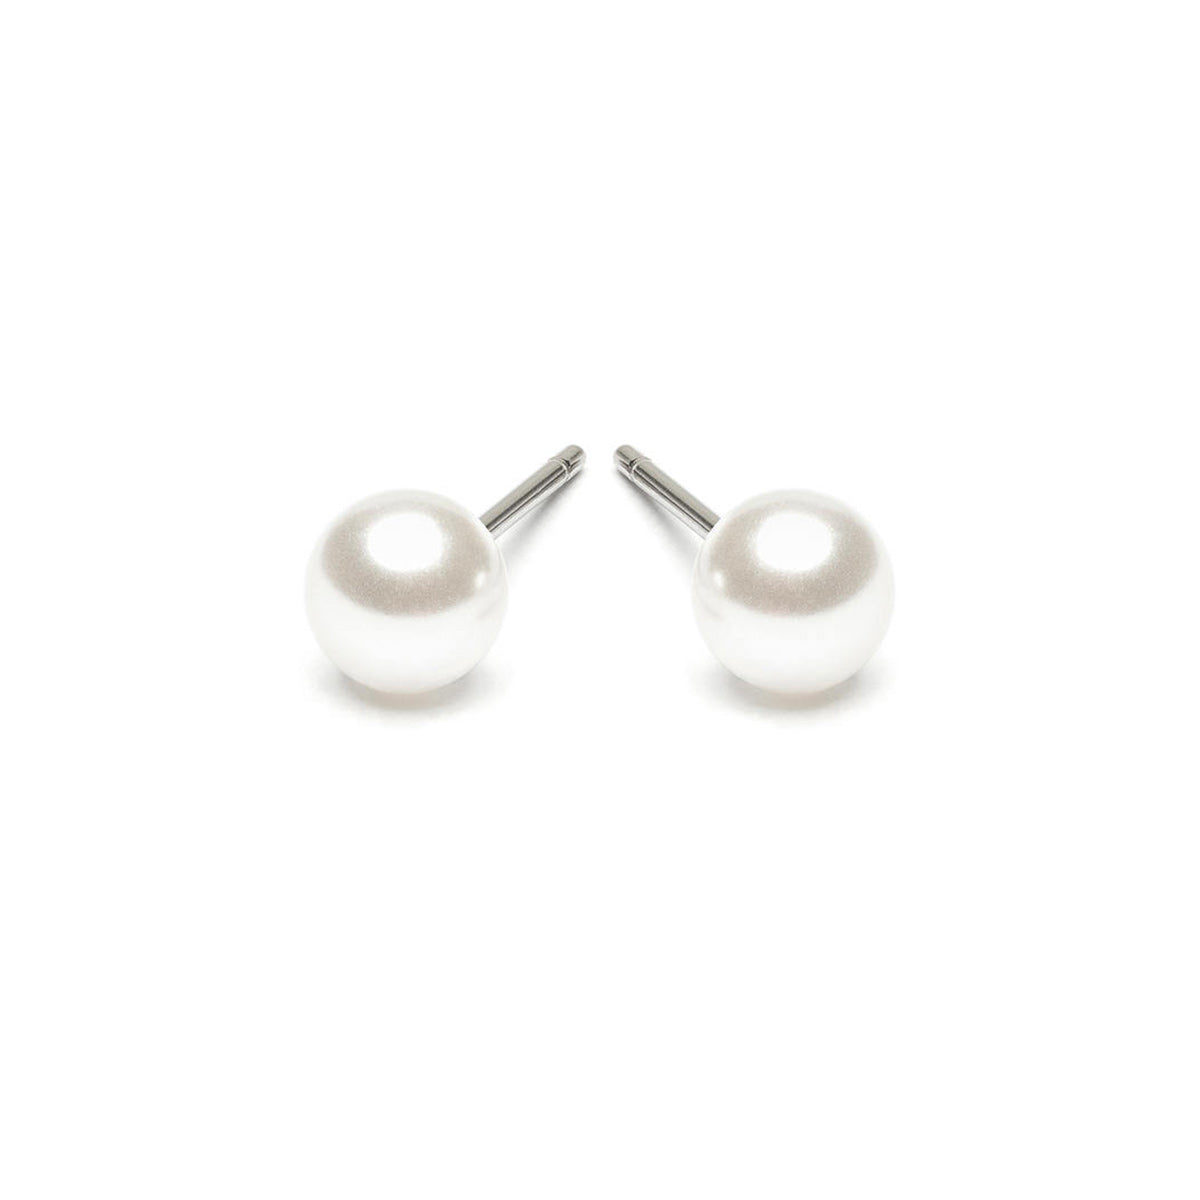 Stainless Steel 5 mm White Pearl Stud Earrings - Simply Whispers